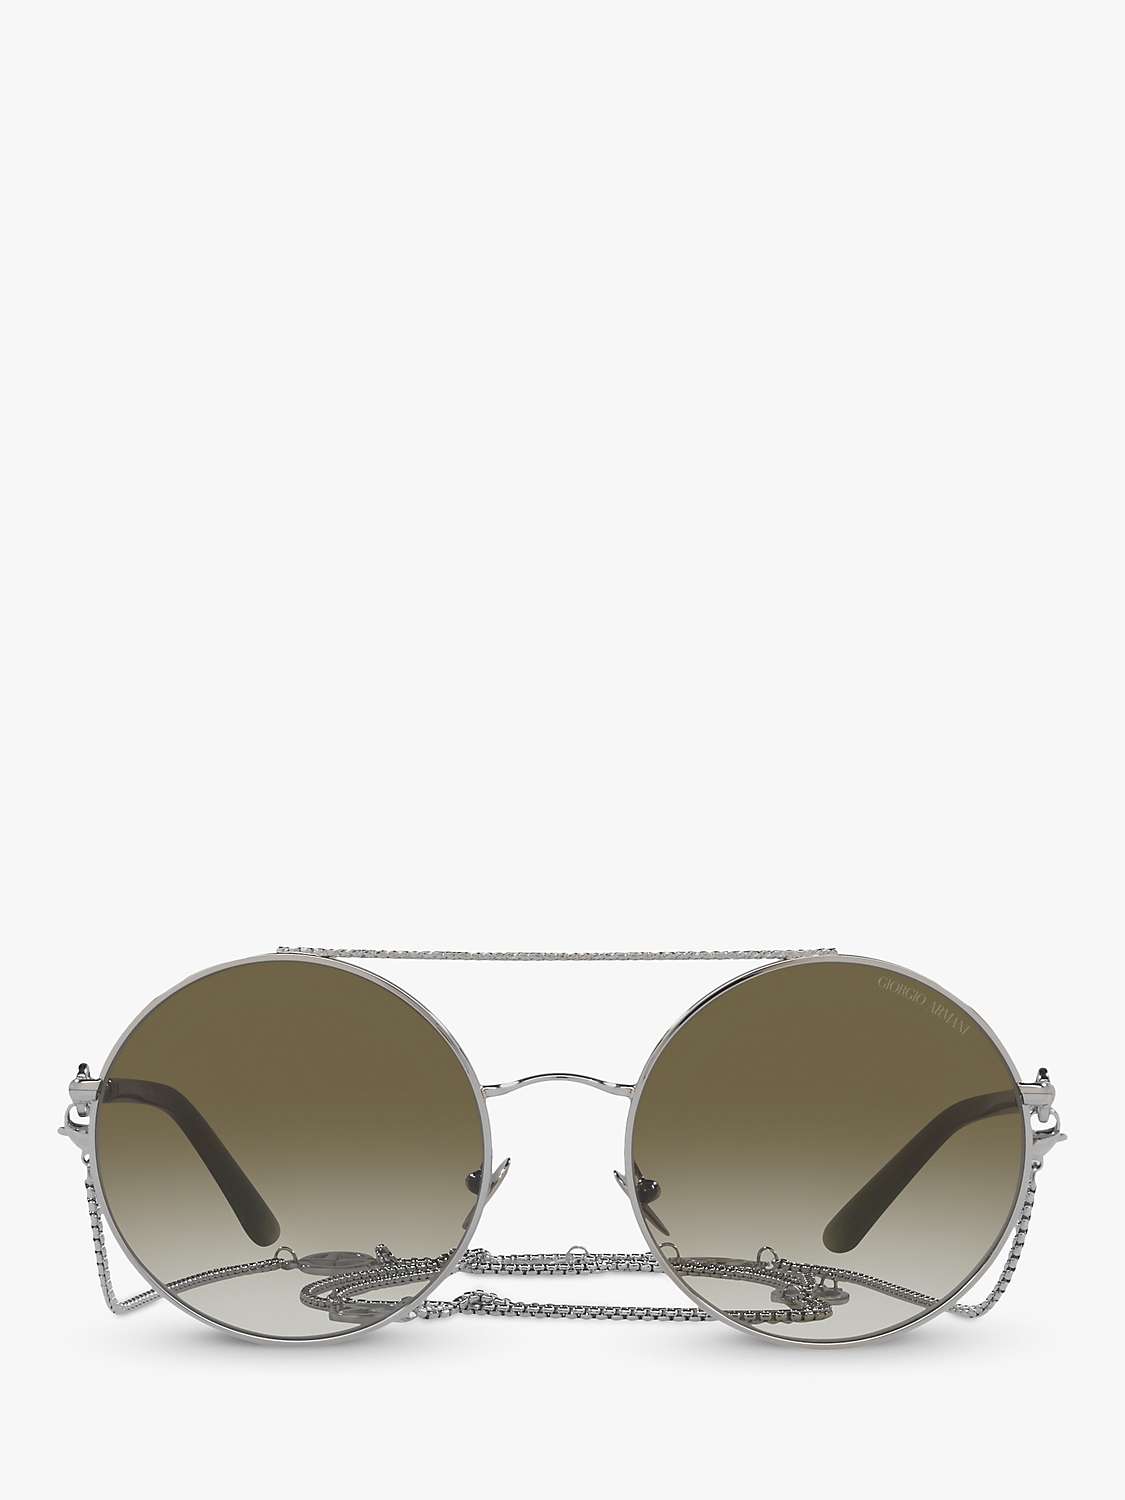 Buy Giorgio Armani AR6135 Women's Round Sunglasses Online at johnlewis.com